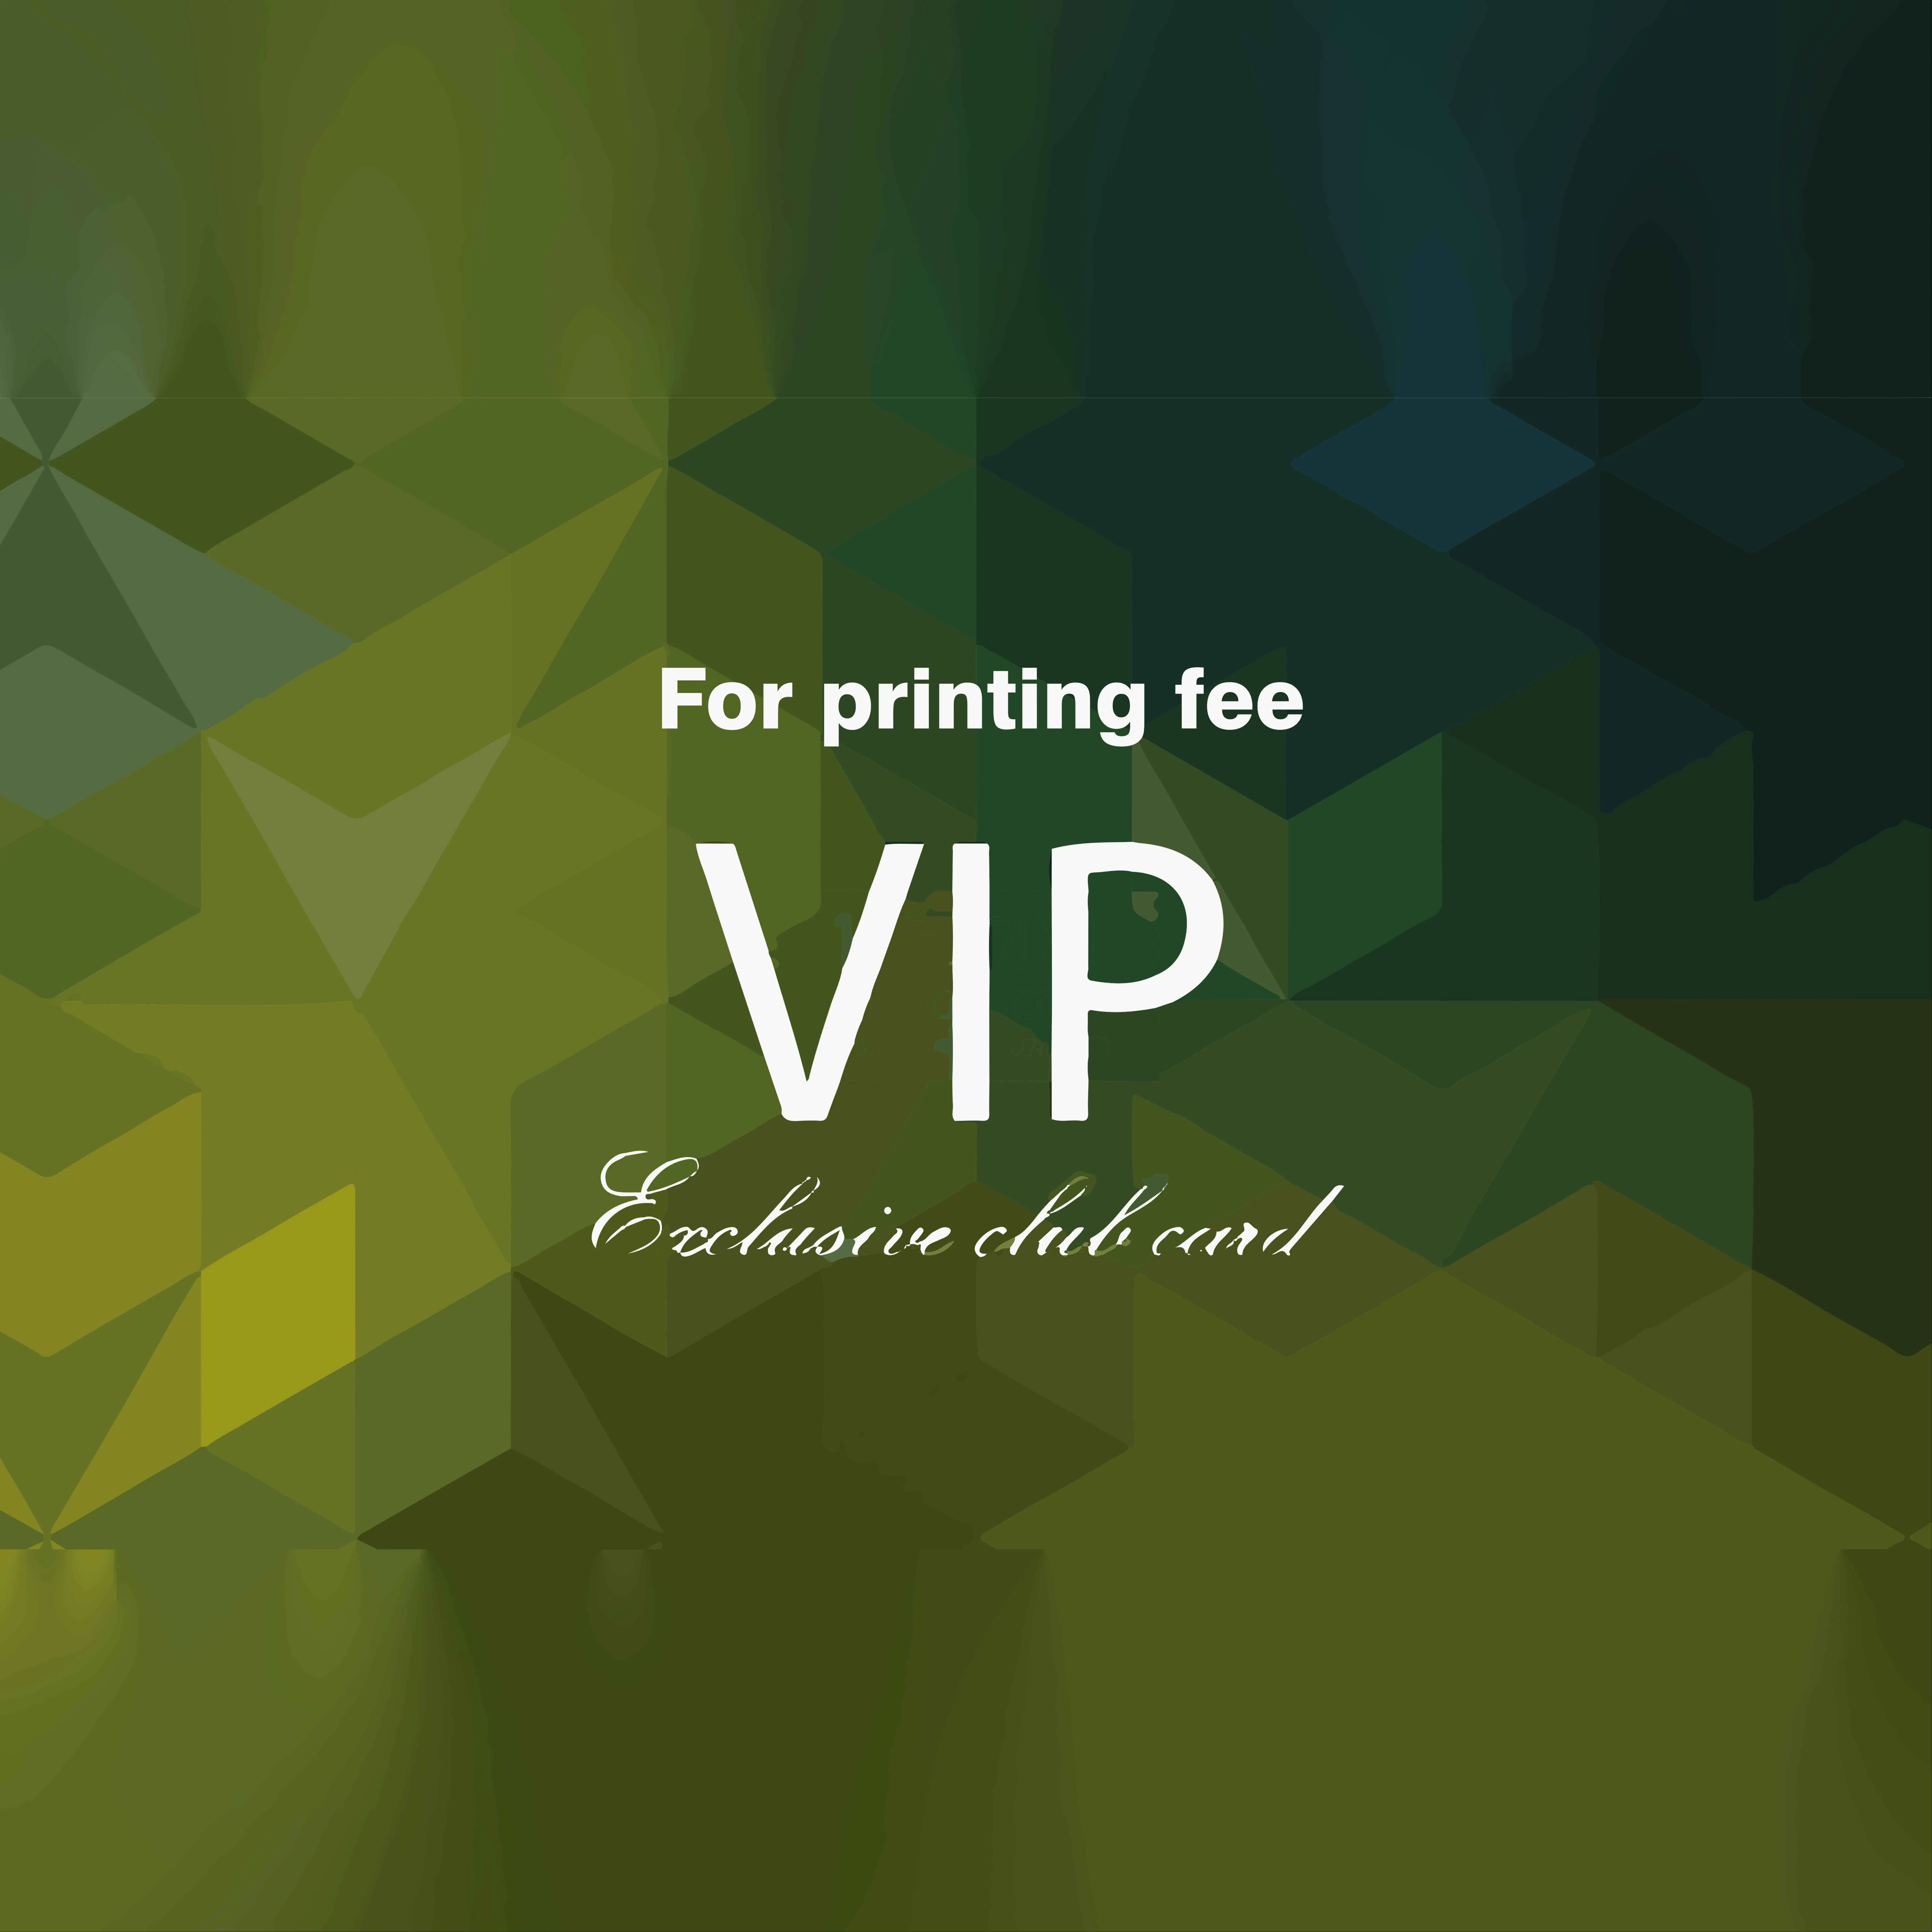 Плата за VIP-печать и оптовая цена